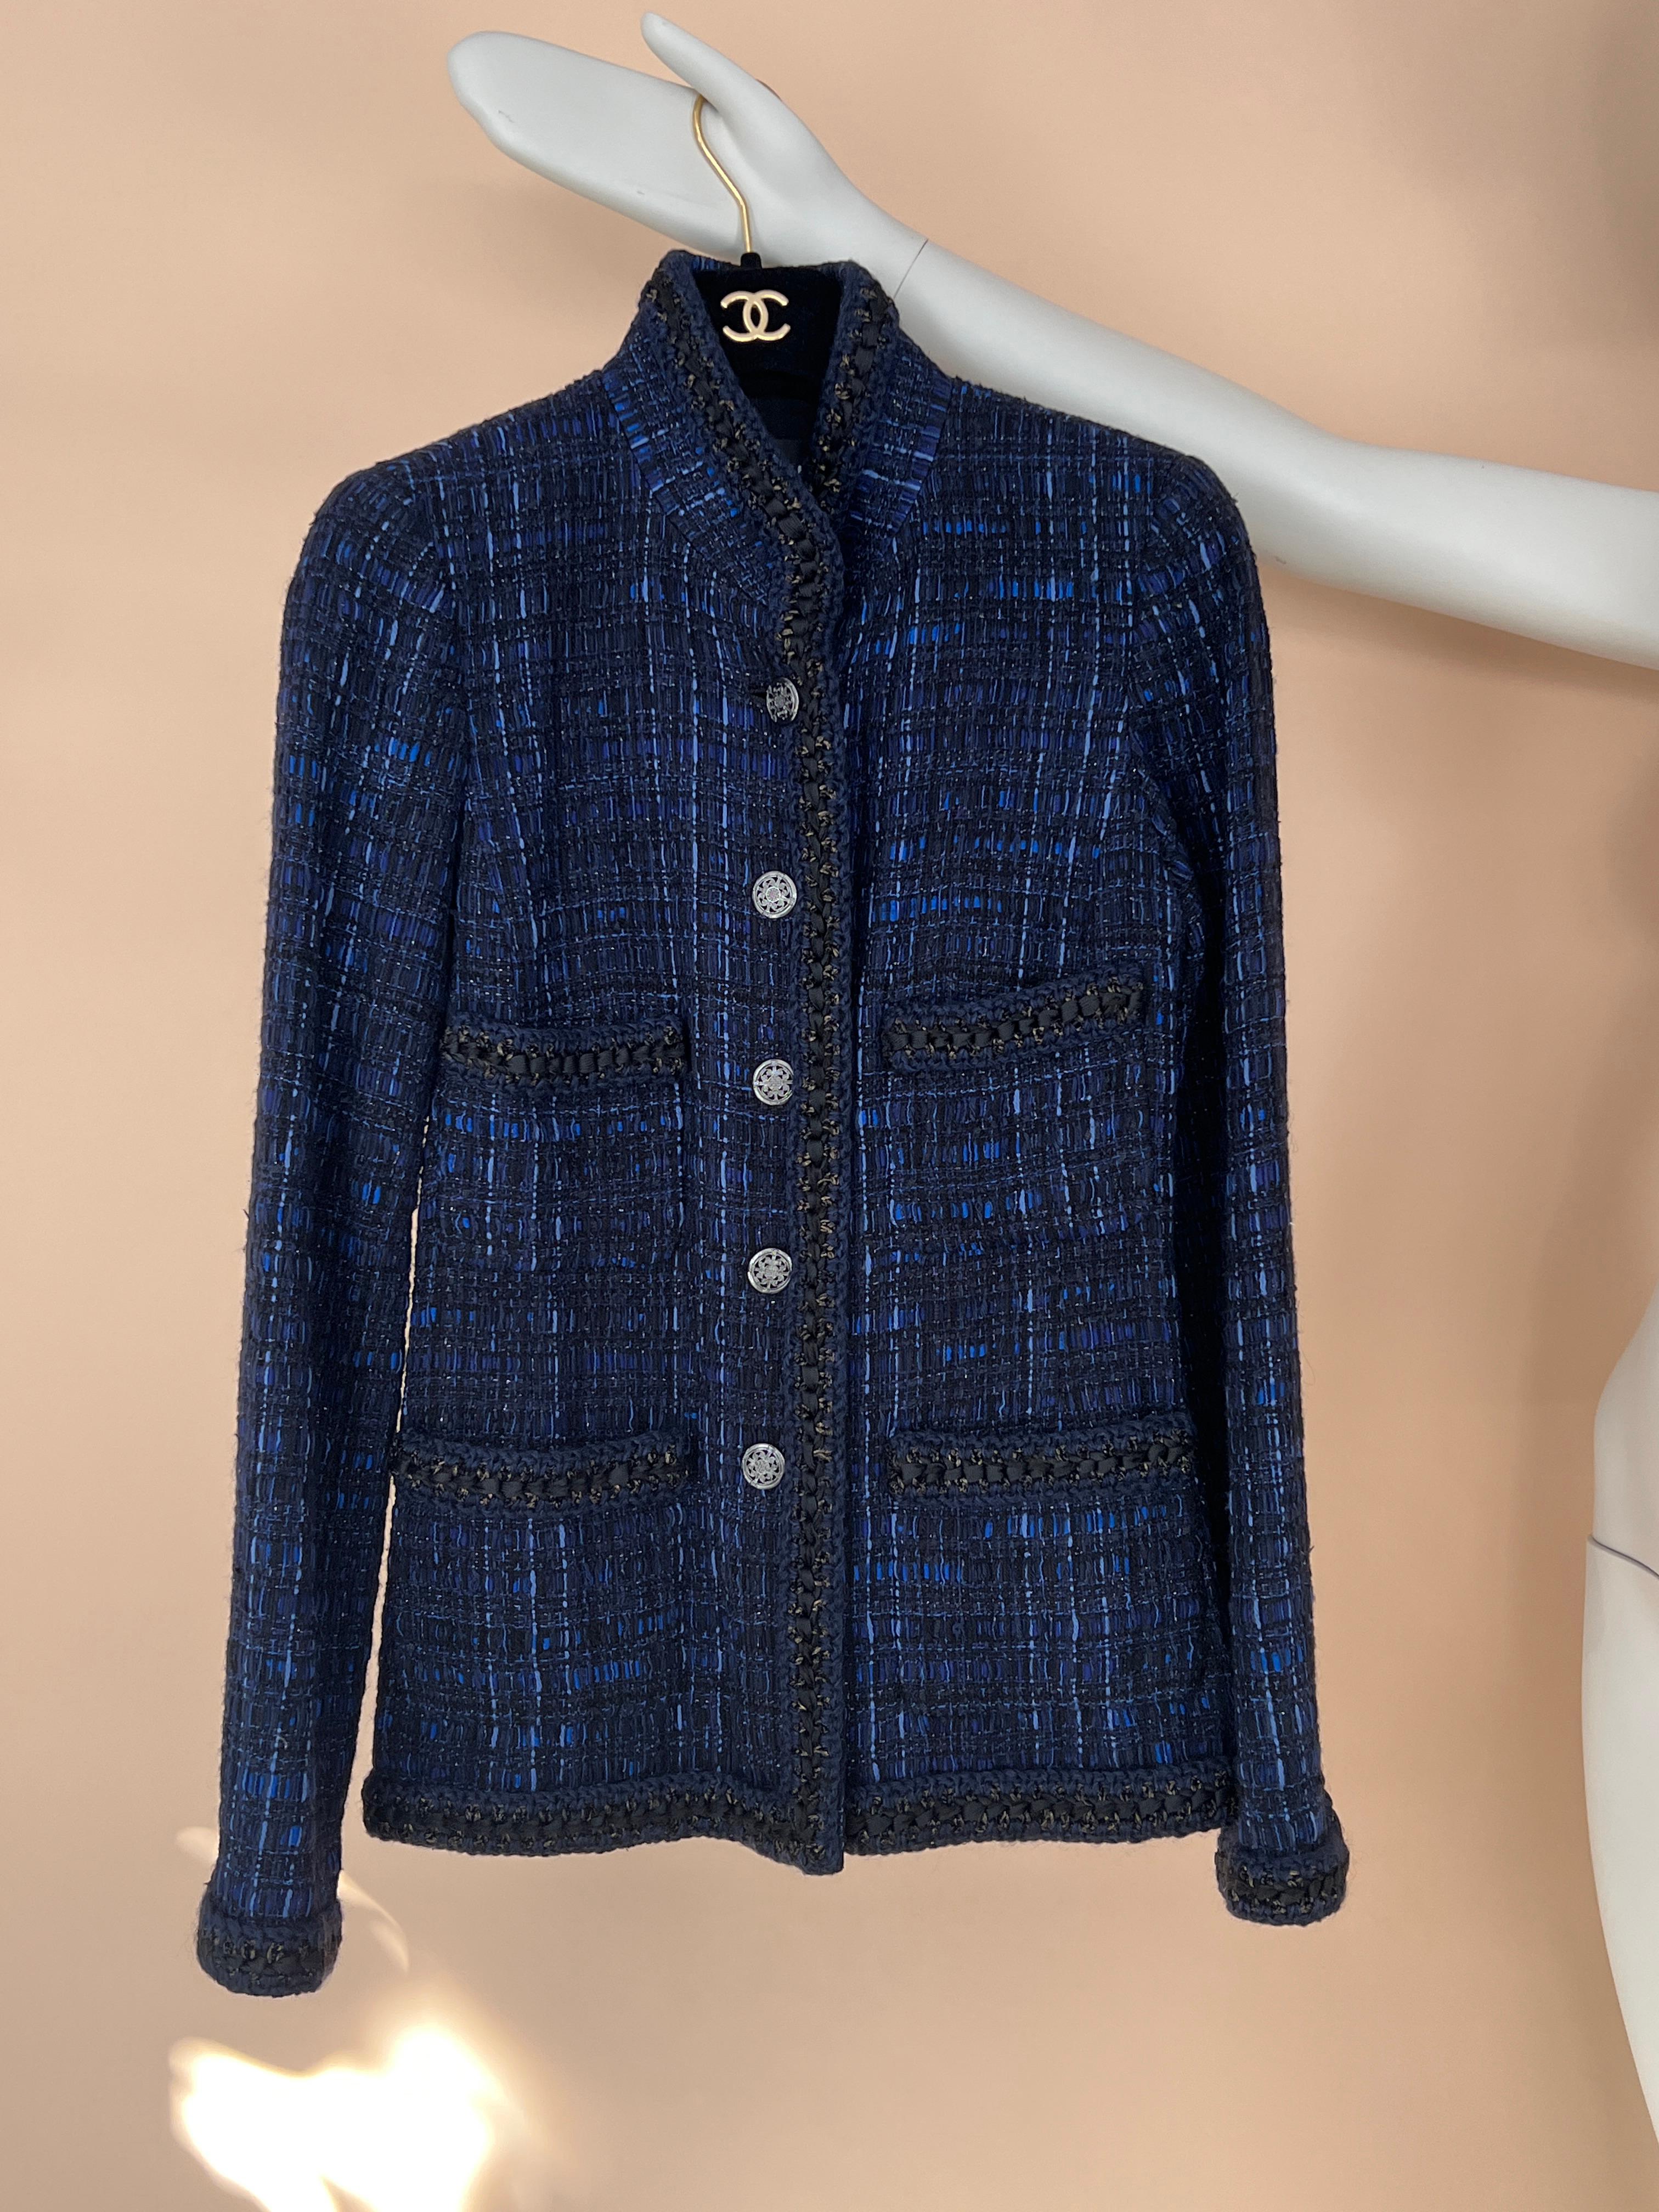 Chanel Shanghai Collection Ribbon Tweed Jacket, 2010 4